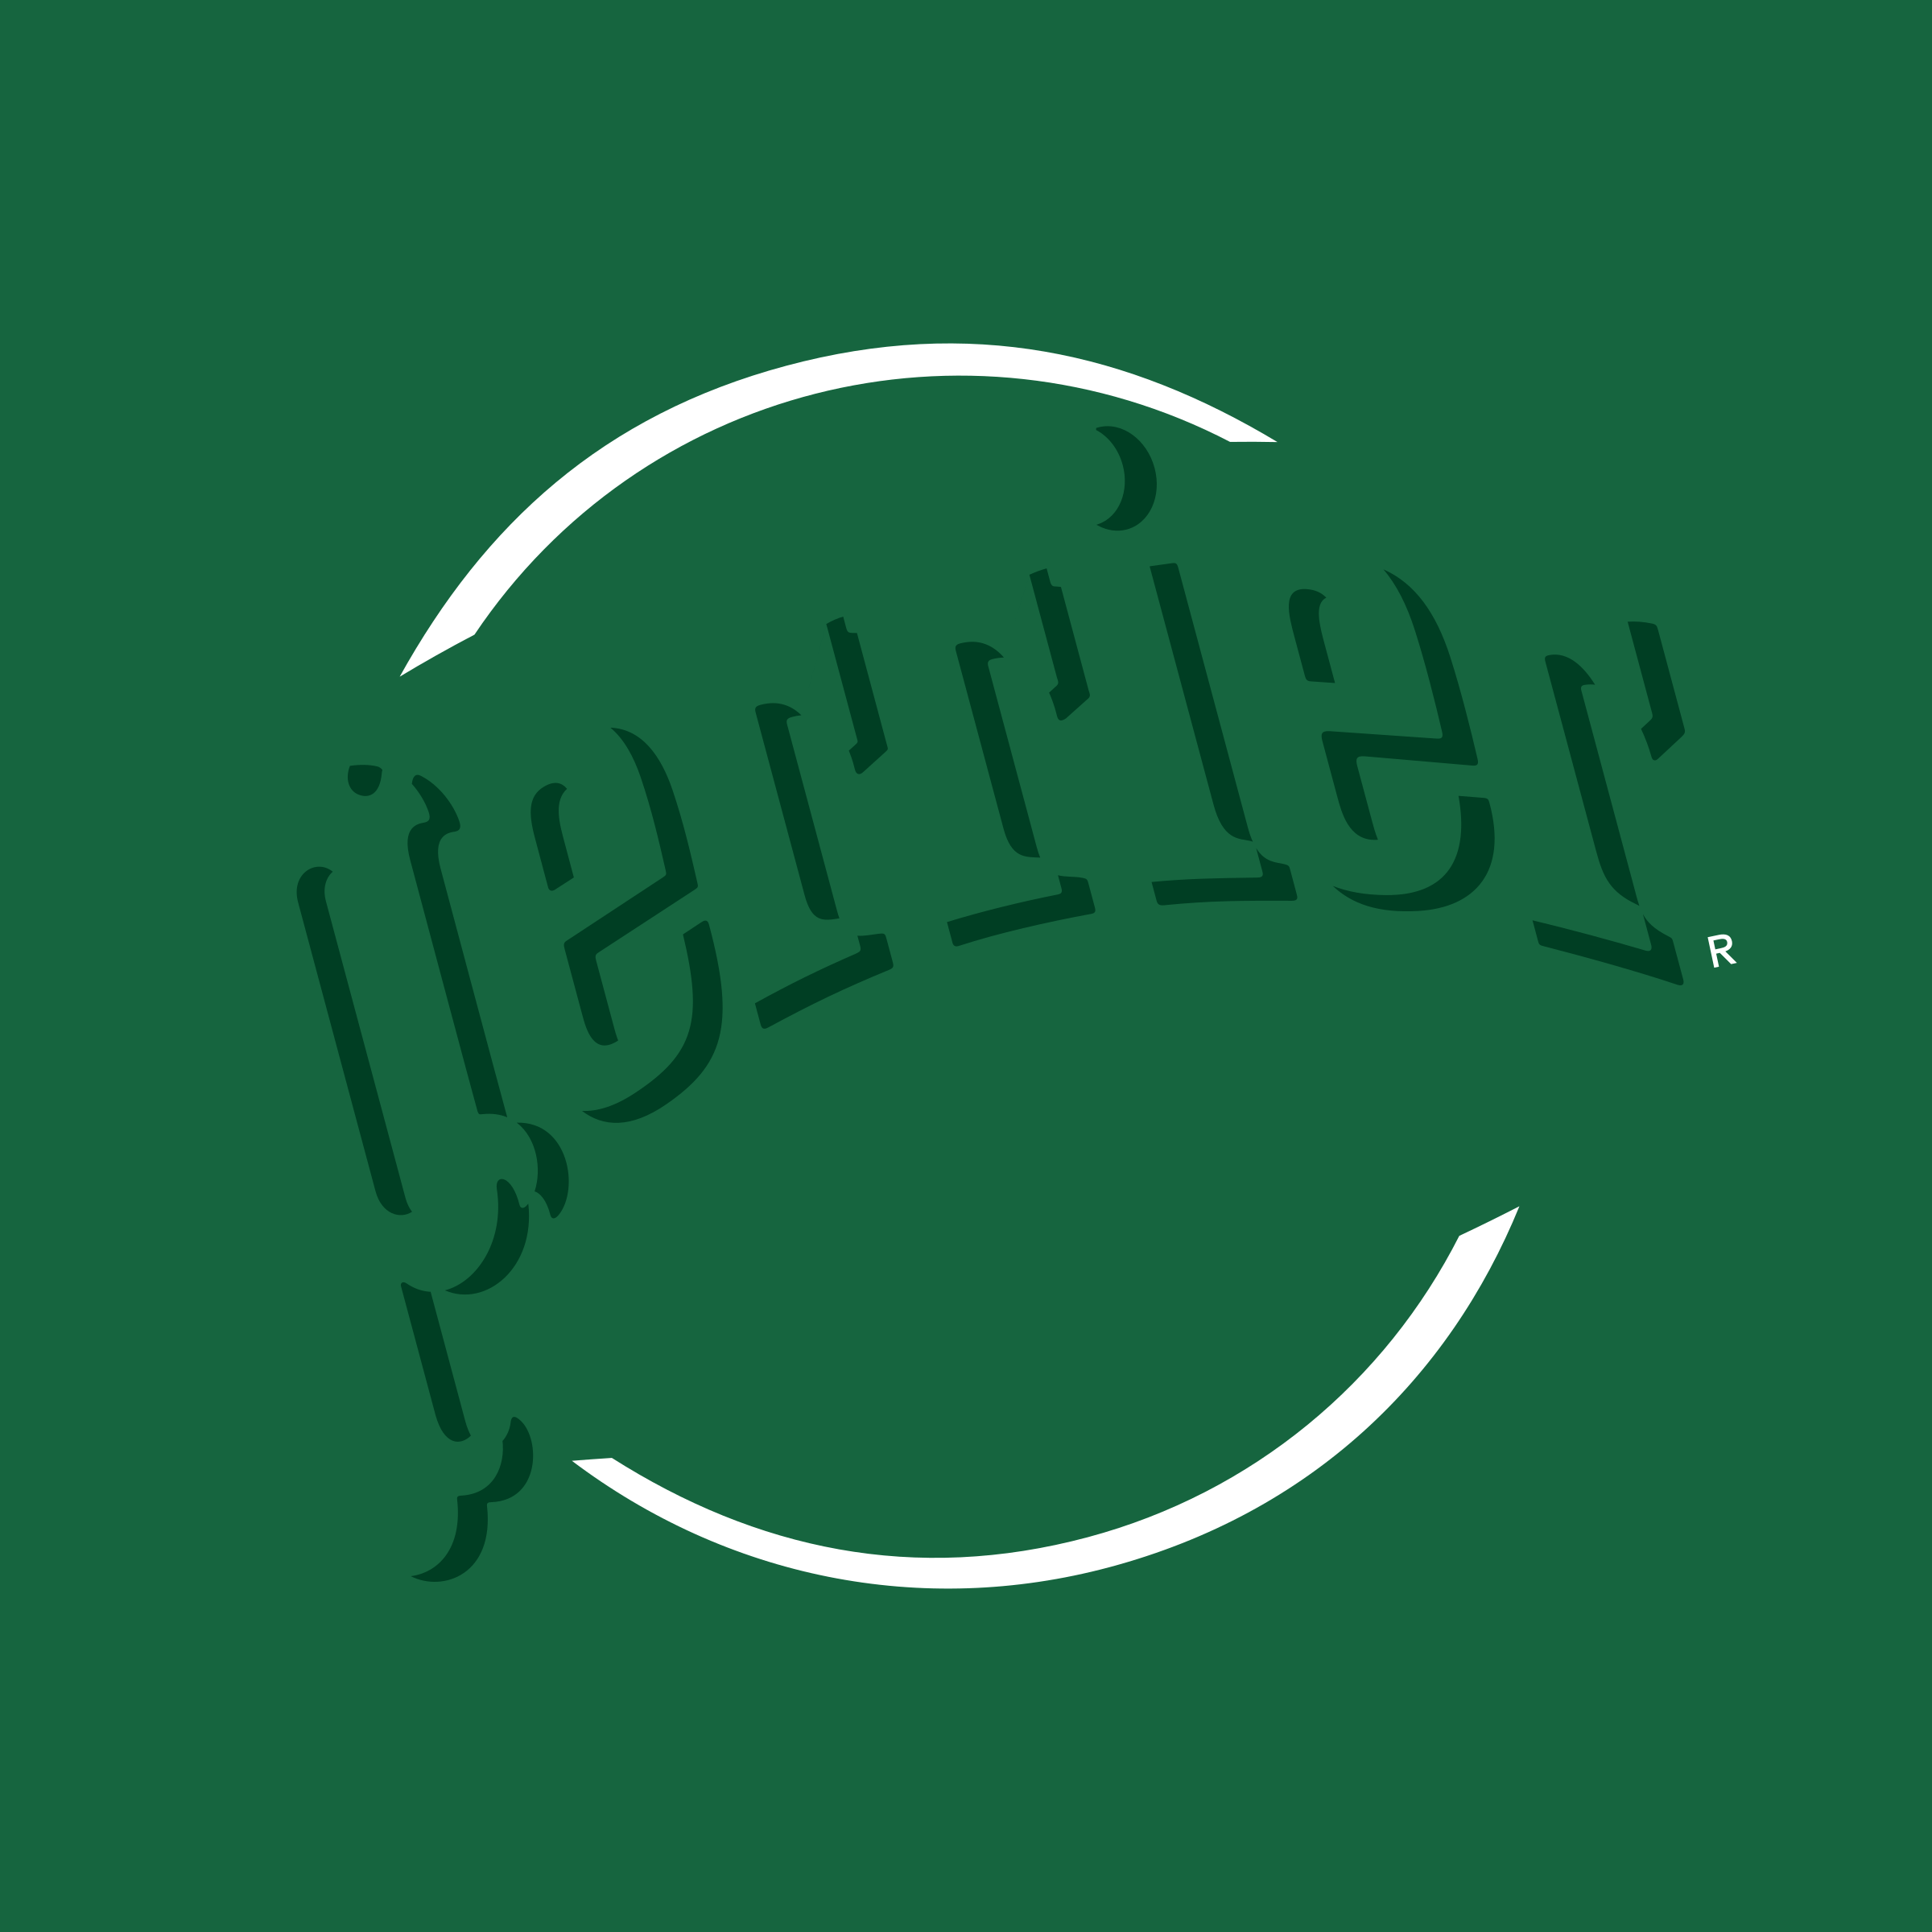 Perrier Logo - Perrier Logo PNG Transparent & SVG Vector - Freebie Supply